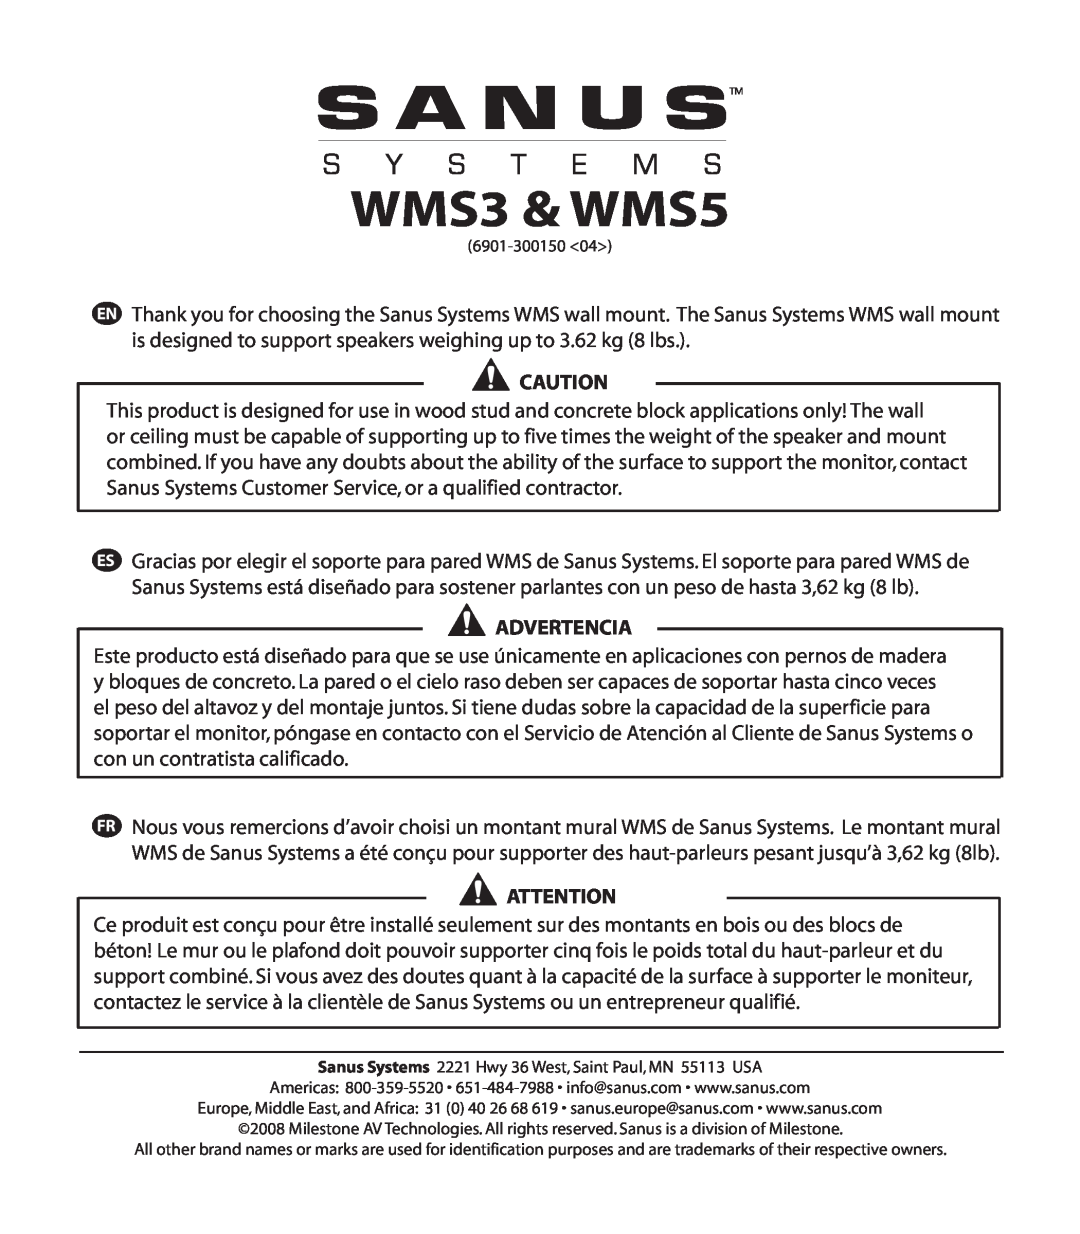 Sanus Systems manual WMS3 & WMS5, Advertencia 